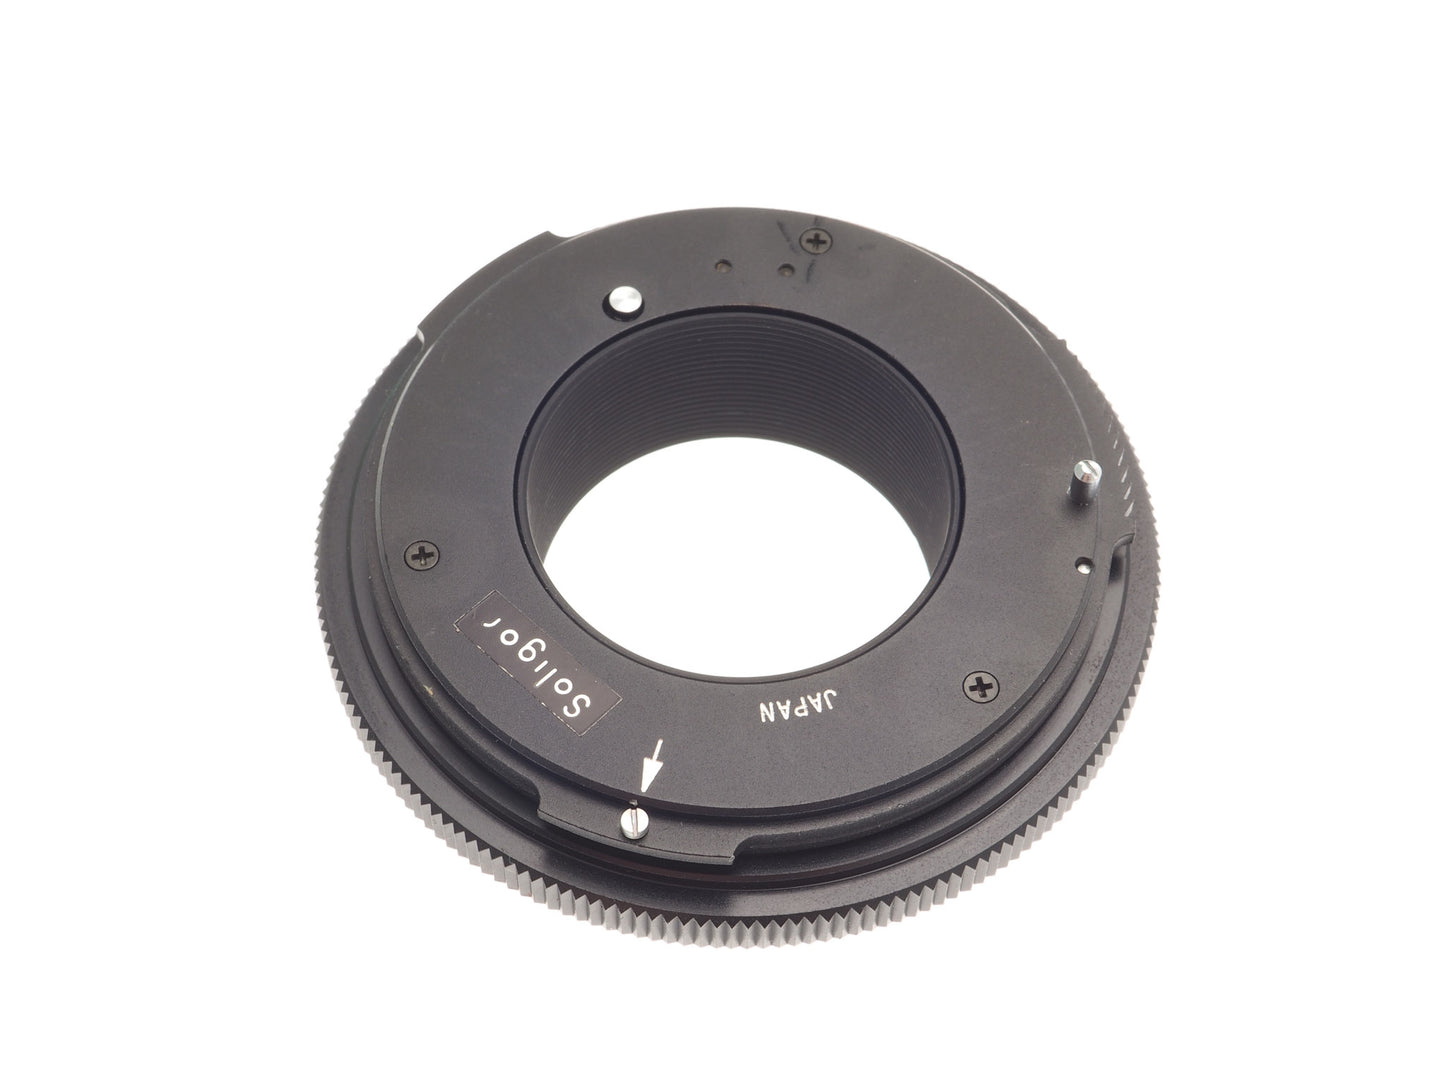 Soligor T4 - Icarex Adapter - Lens Adapter